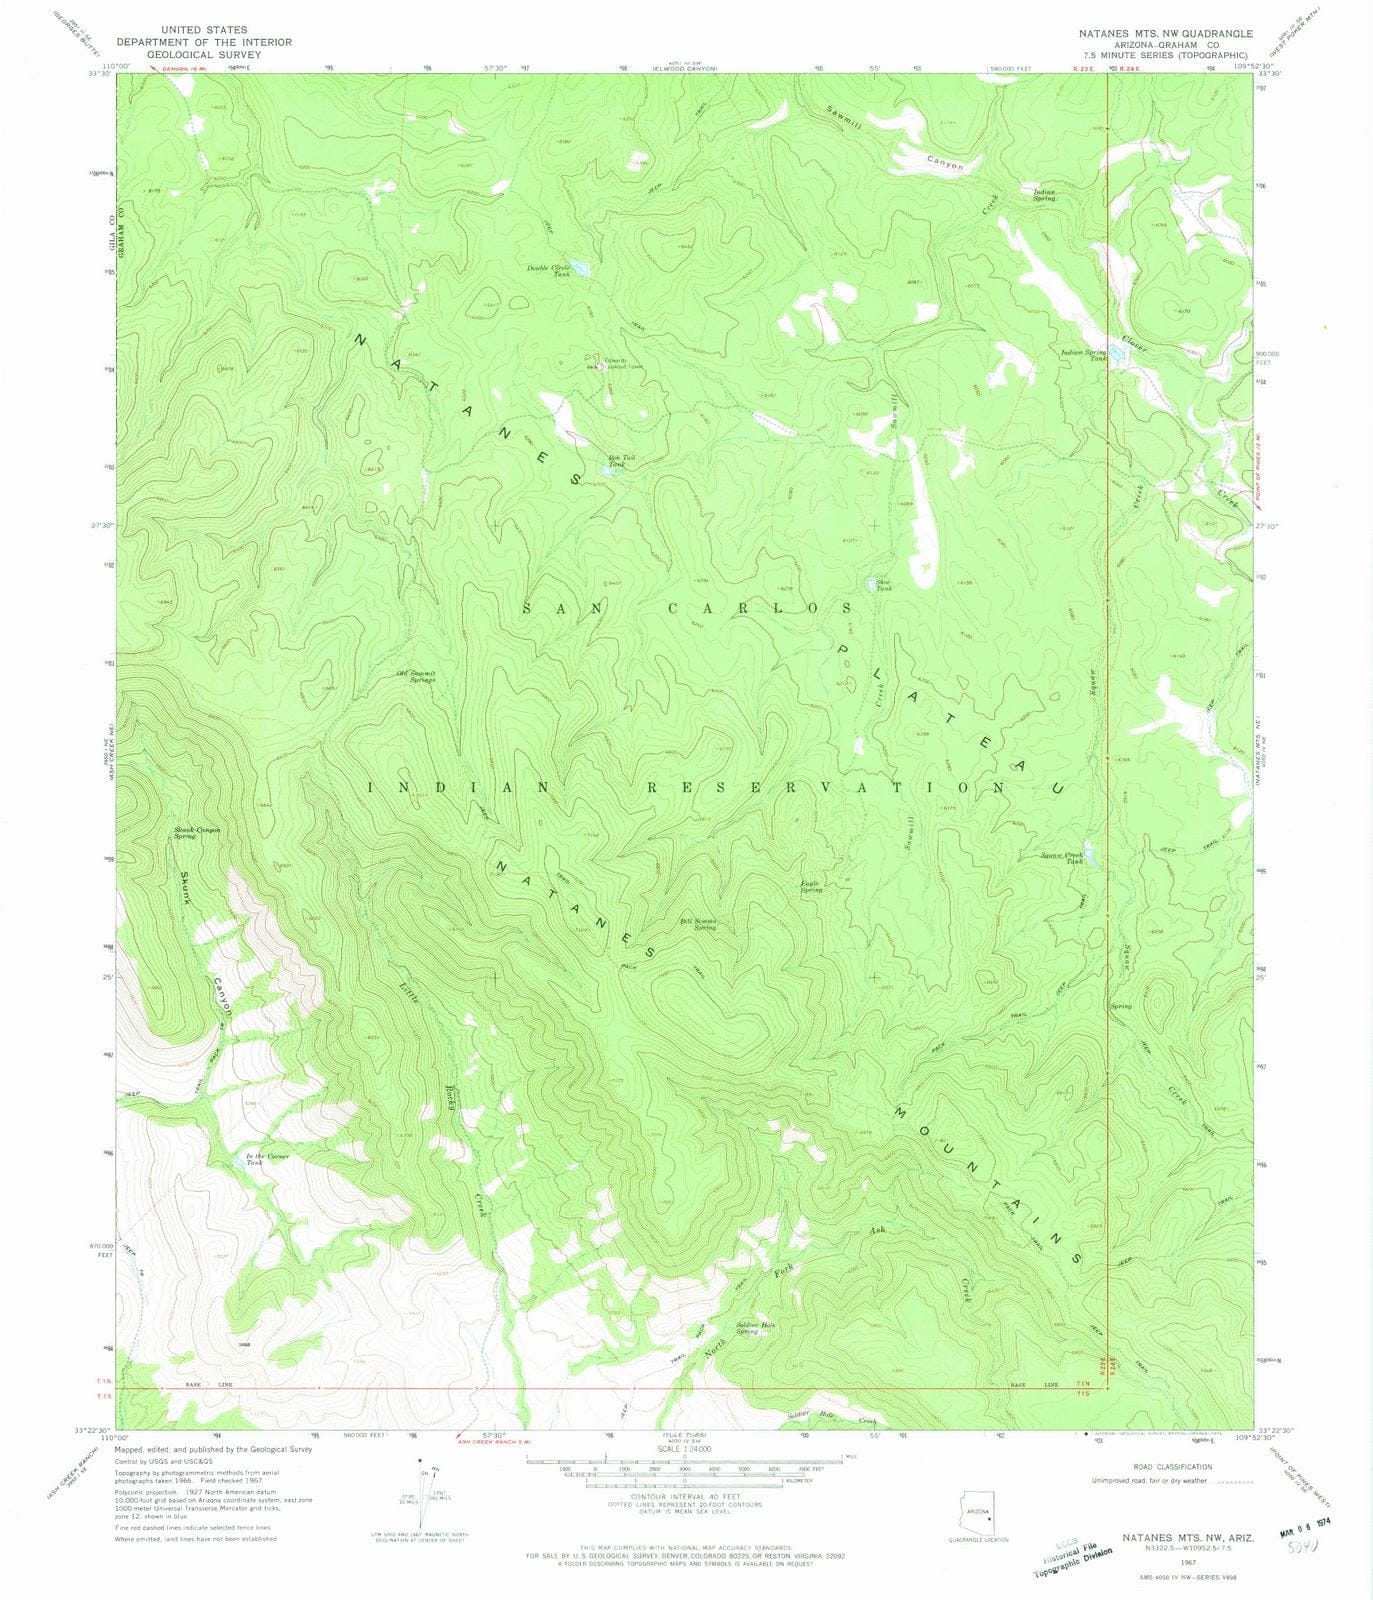 1967 Natanes MTS, AZ - Arizona - USGS Topographic Map v2